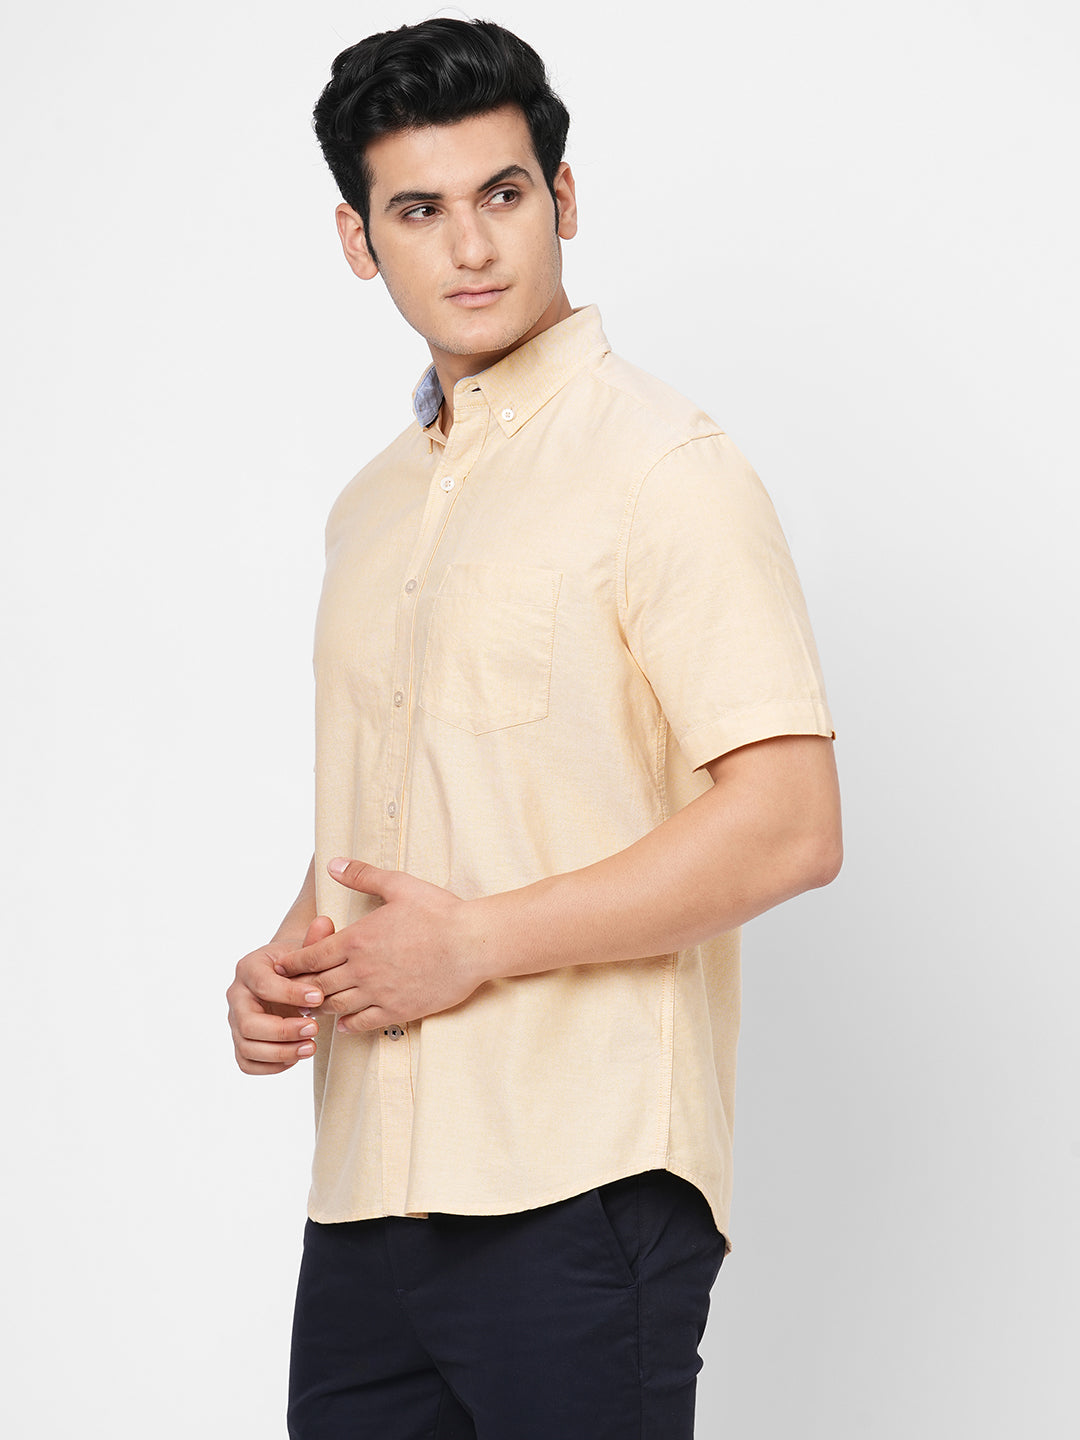 Men's Oxford Cotton Button down Collar Short Sleeved Shirt - Yellow